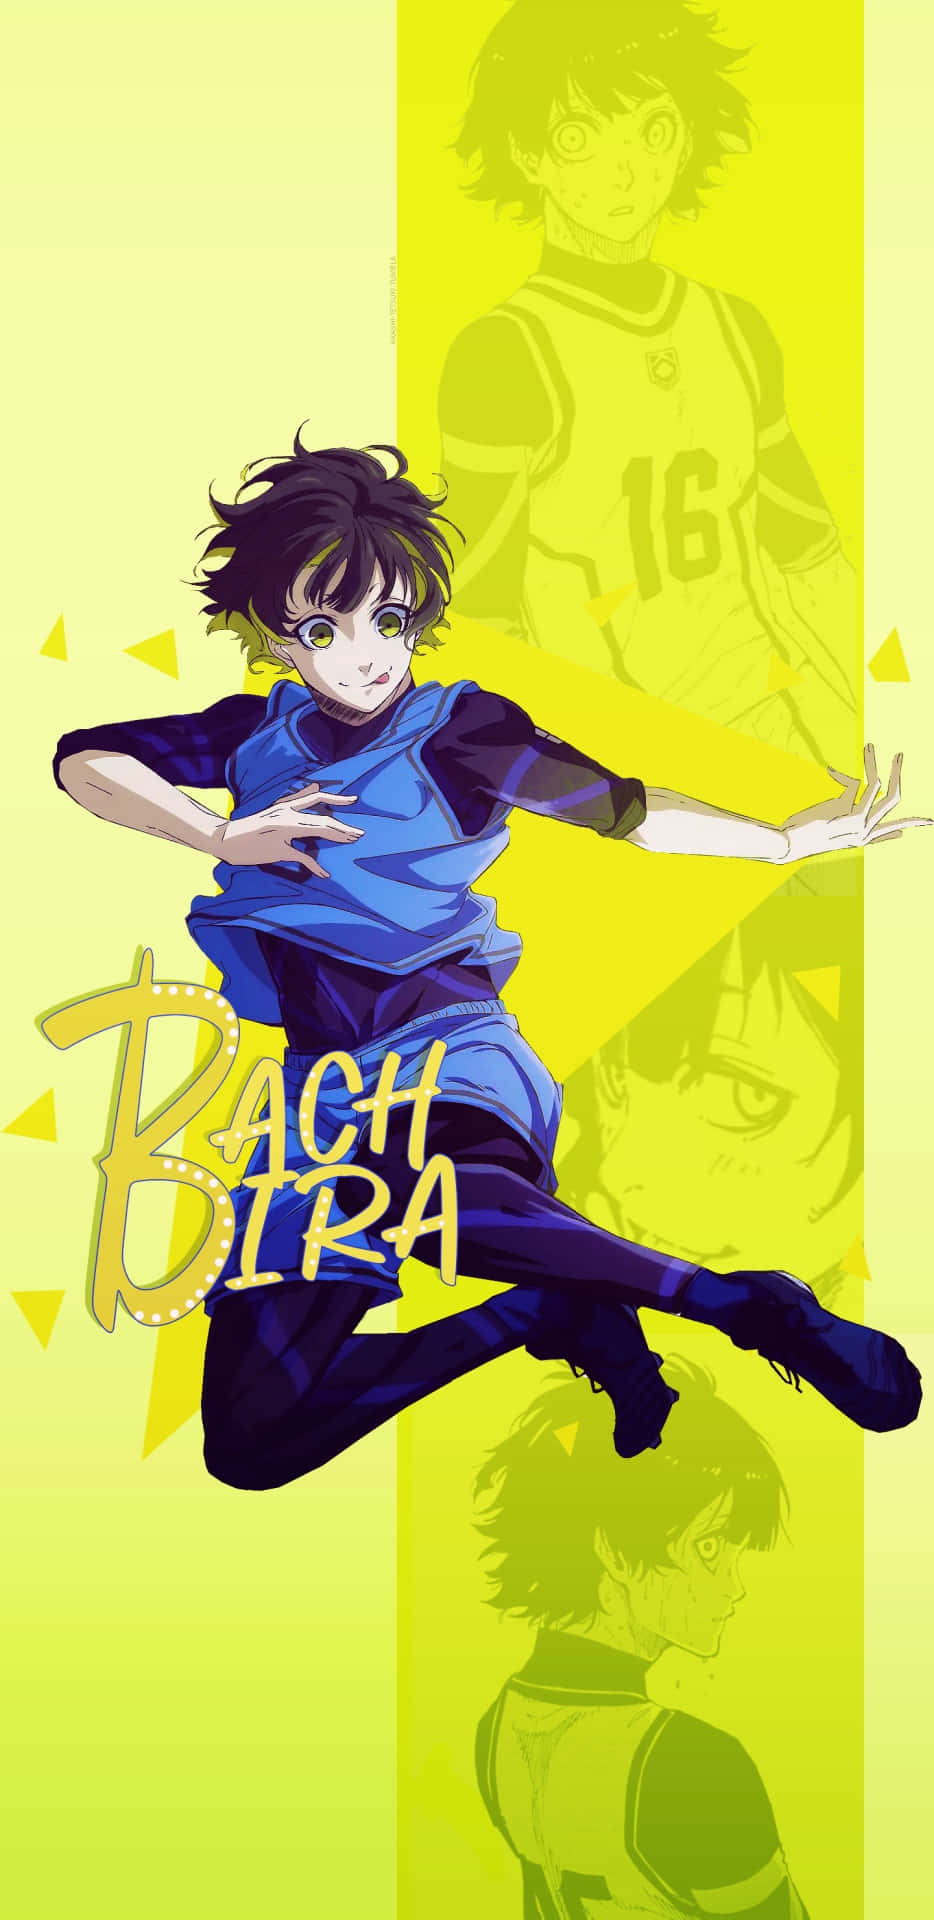 Bachira Anime Character Jumping Wallpaper